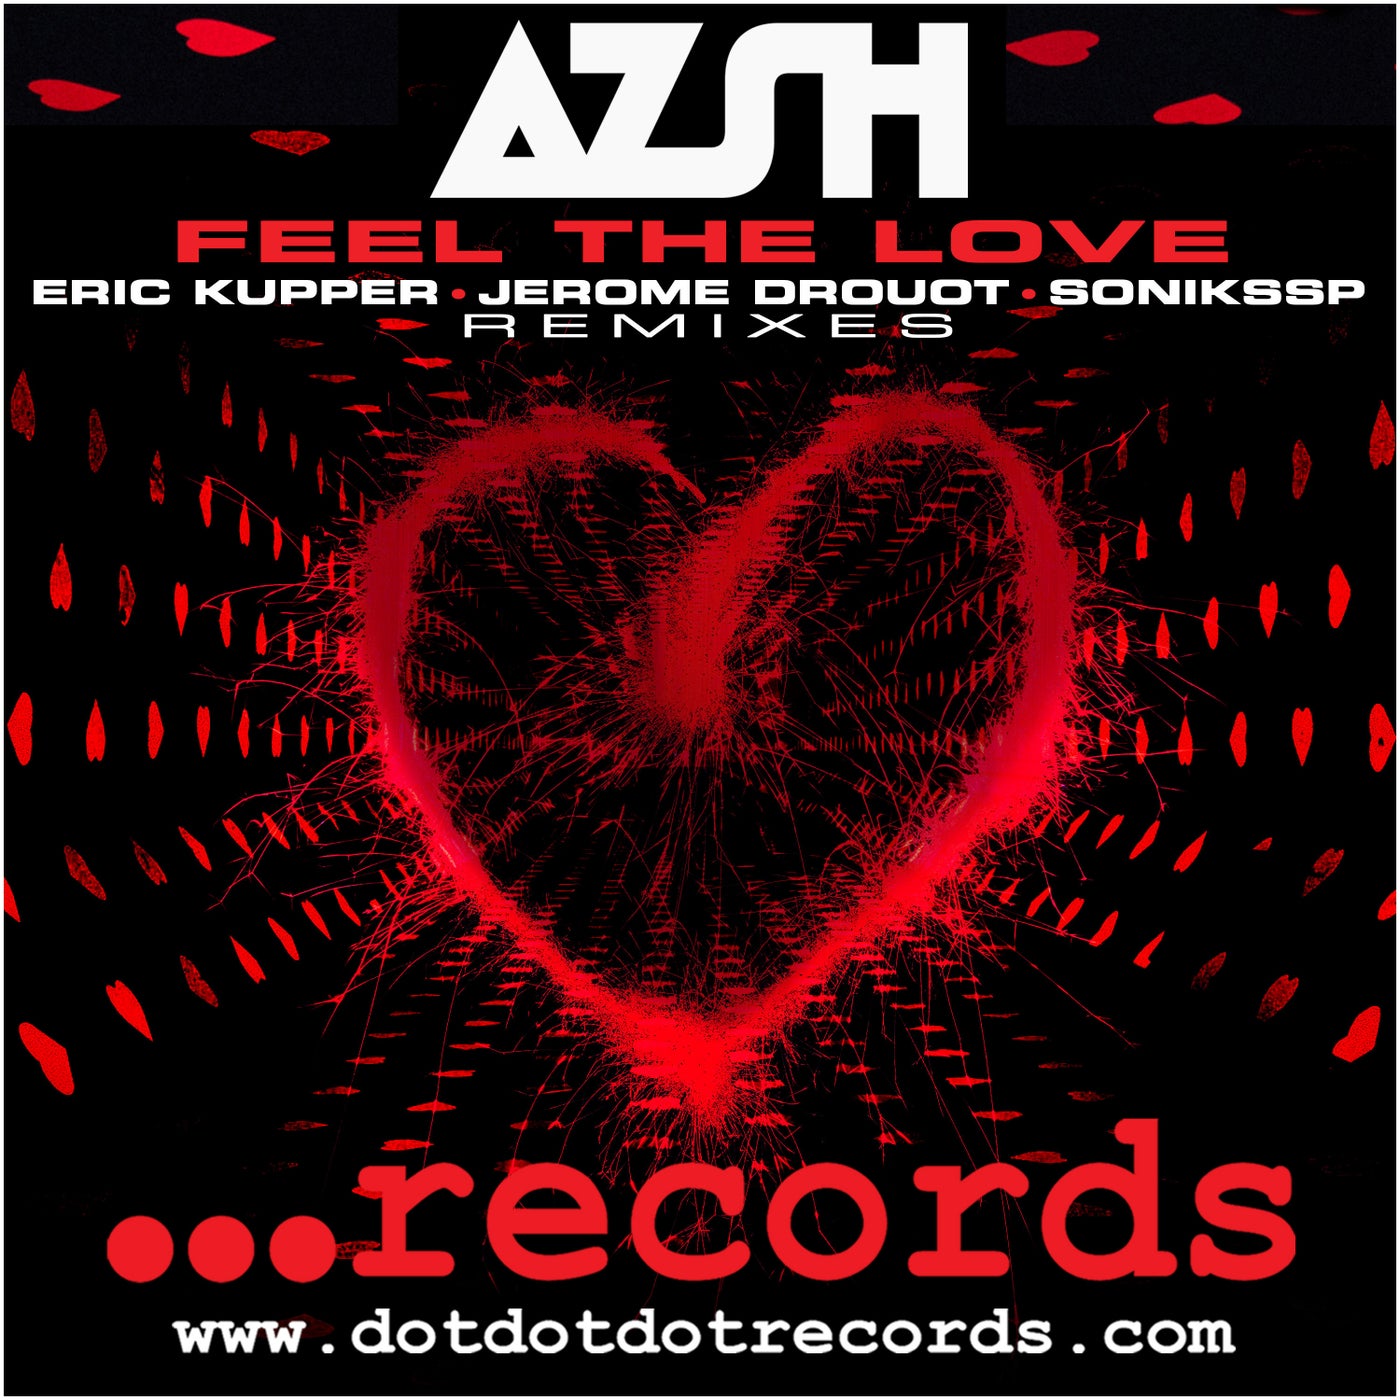 Azsh - Feel The Love (Jerome Drouot Nostalgia Main Mix)